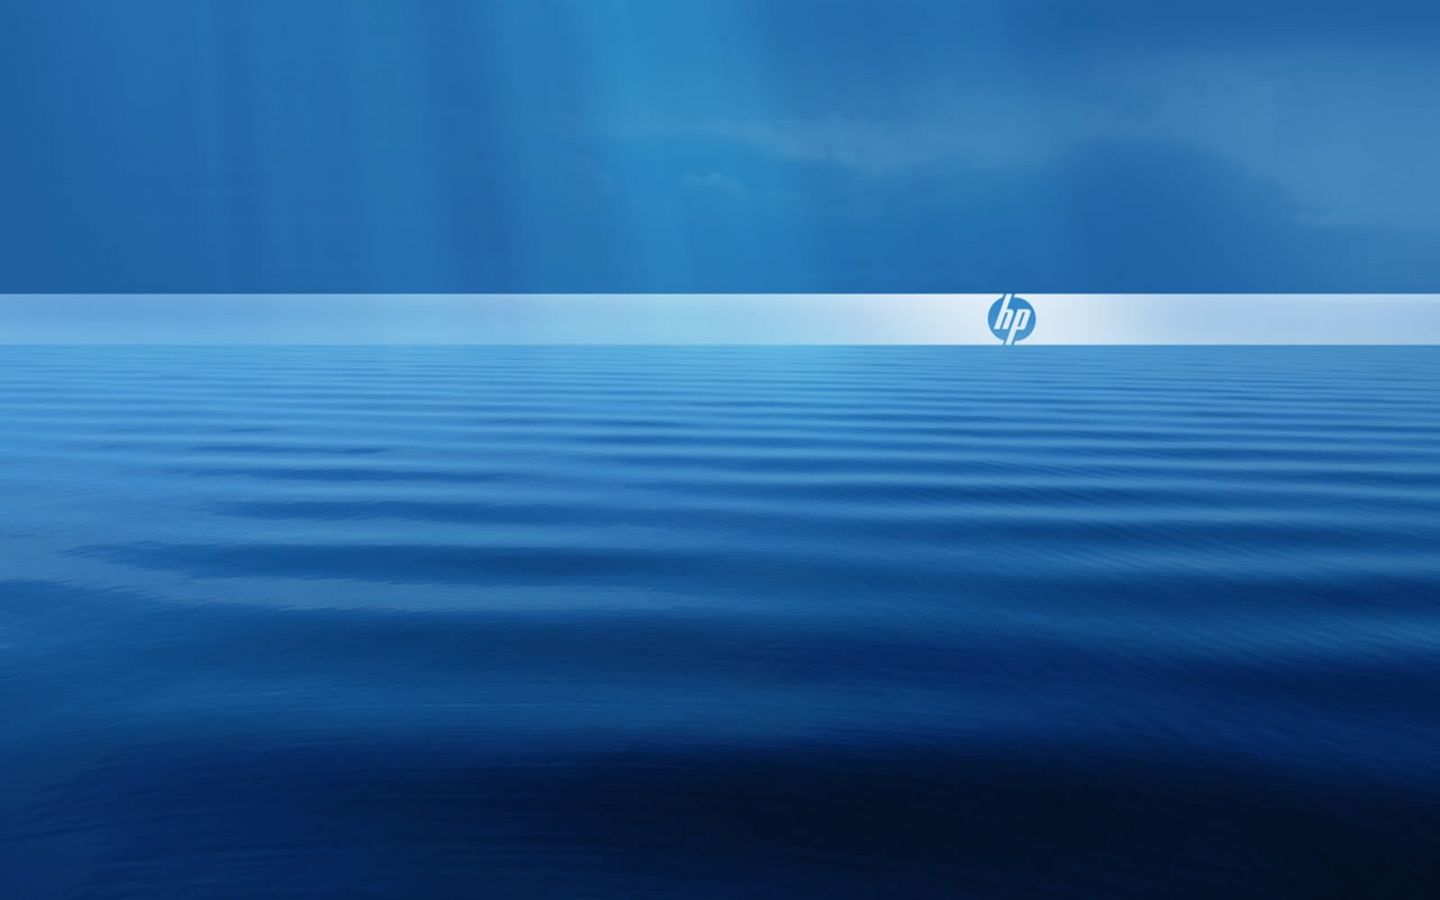 Hewlett Packard Desktop Background Downloads